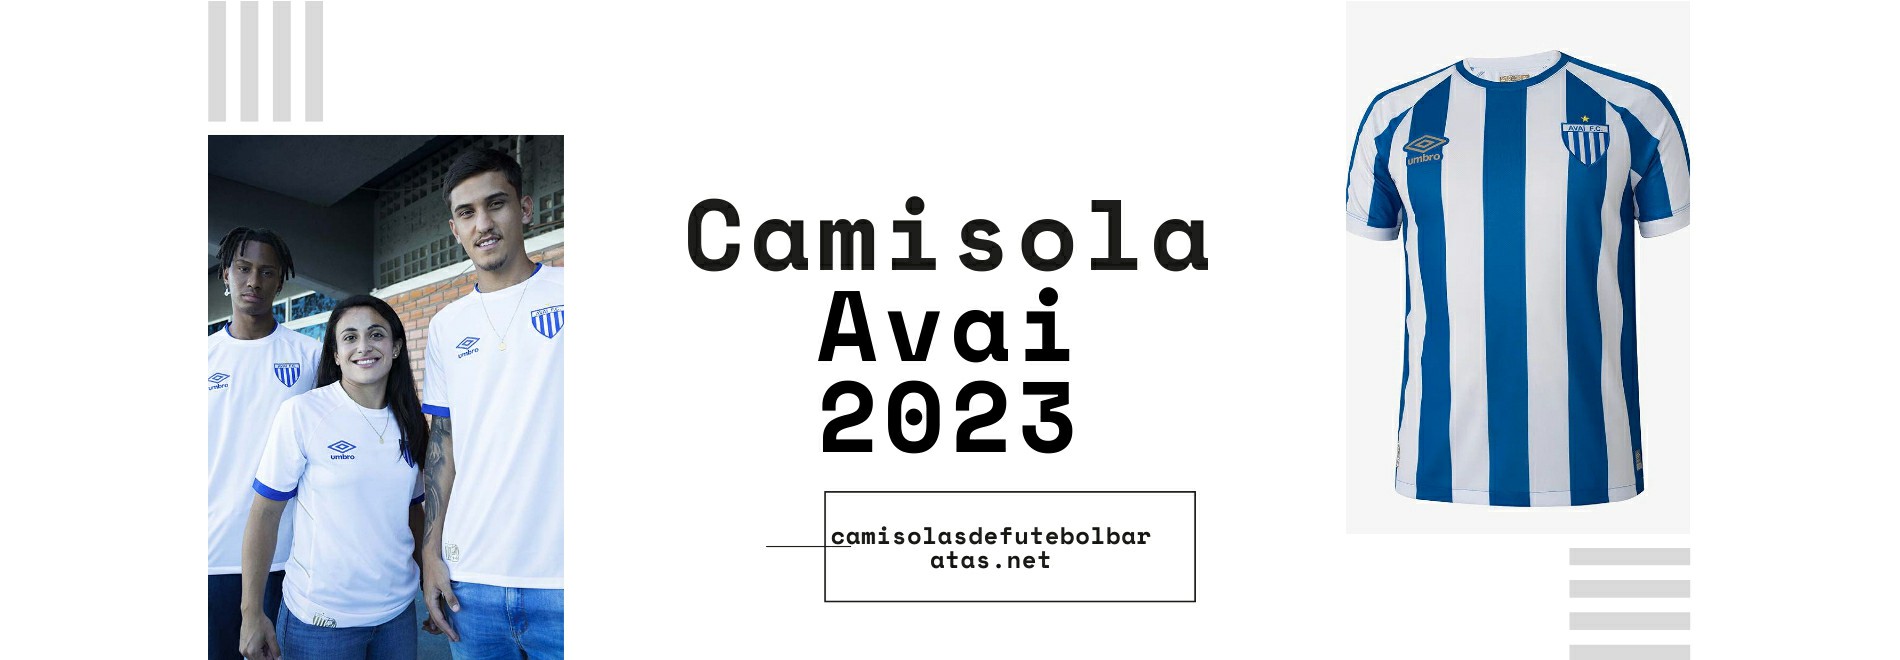 Camisola Avai 2023-2024